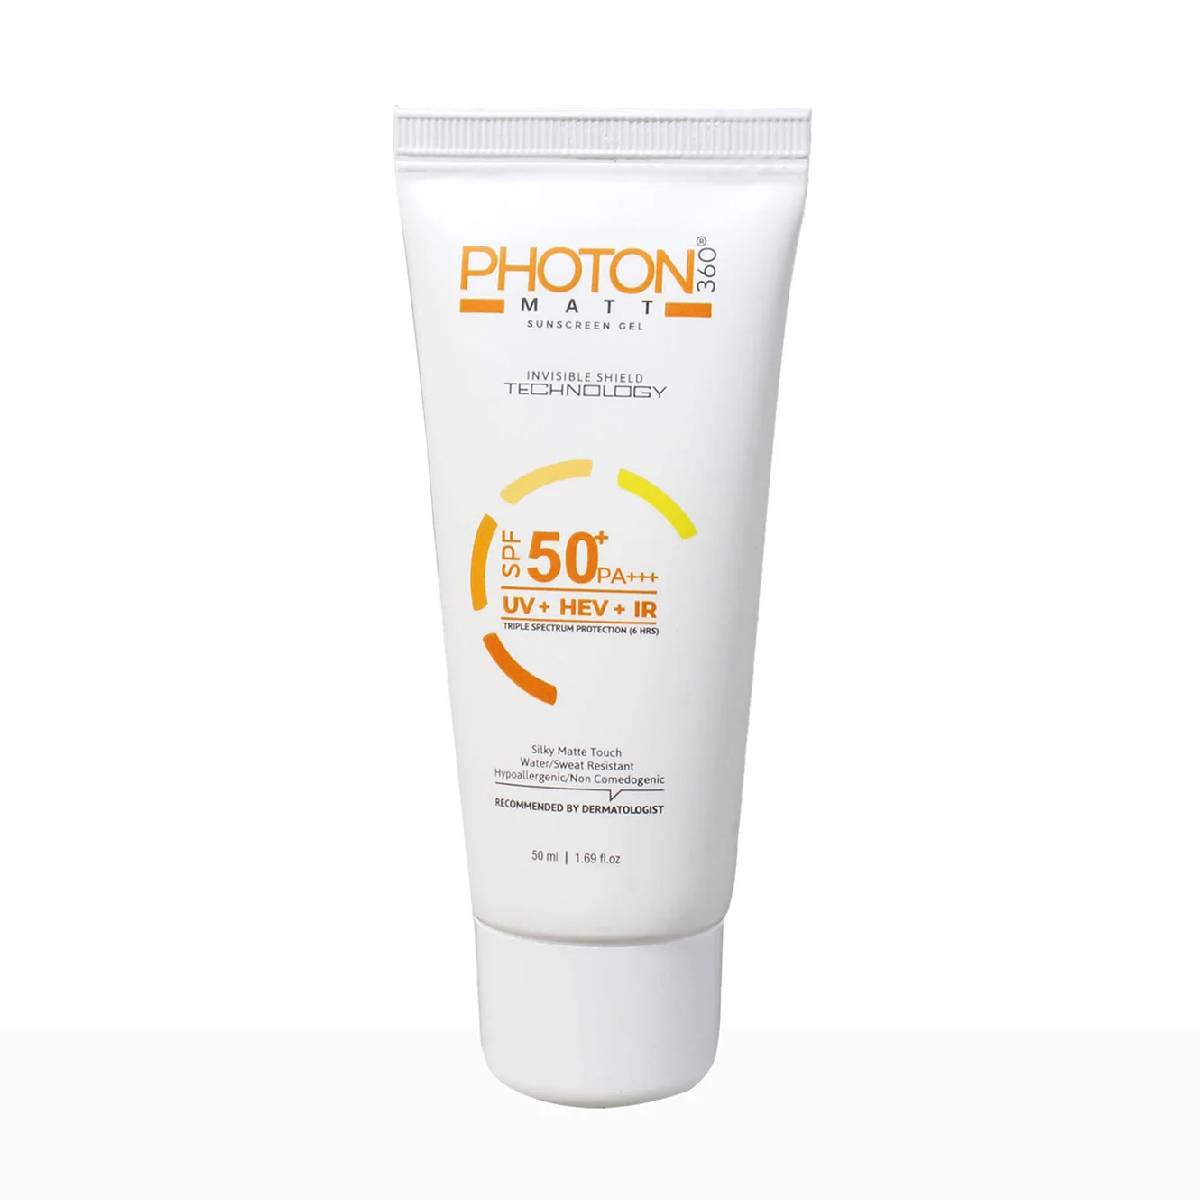 Photon 360 Matte Sunscreen Gel SPF 50+ PA+++